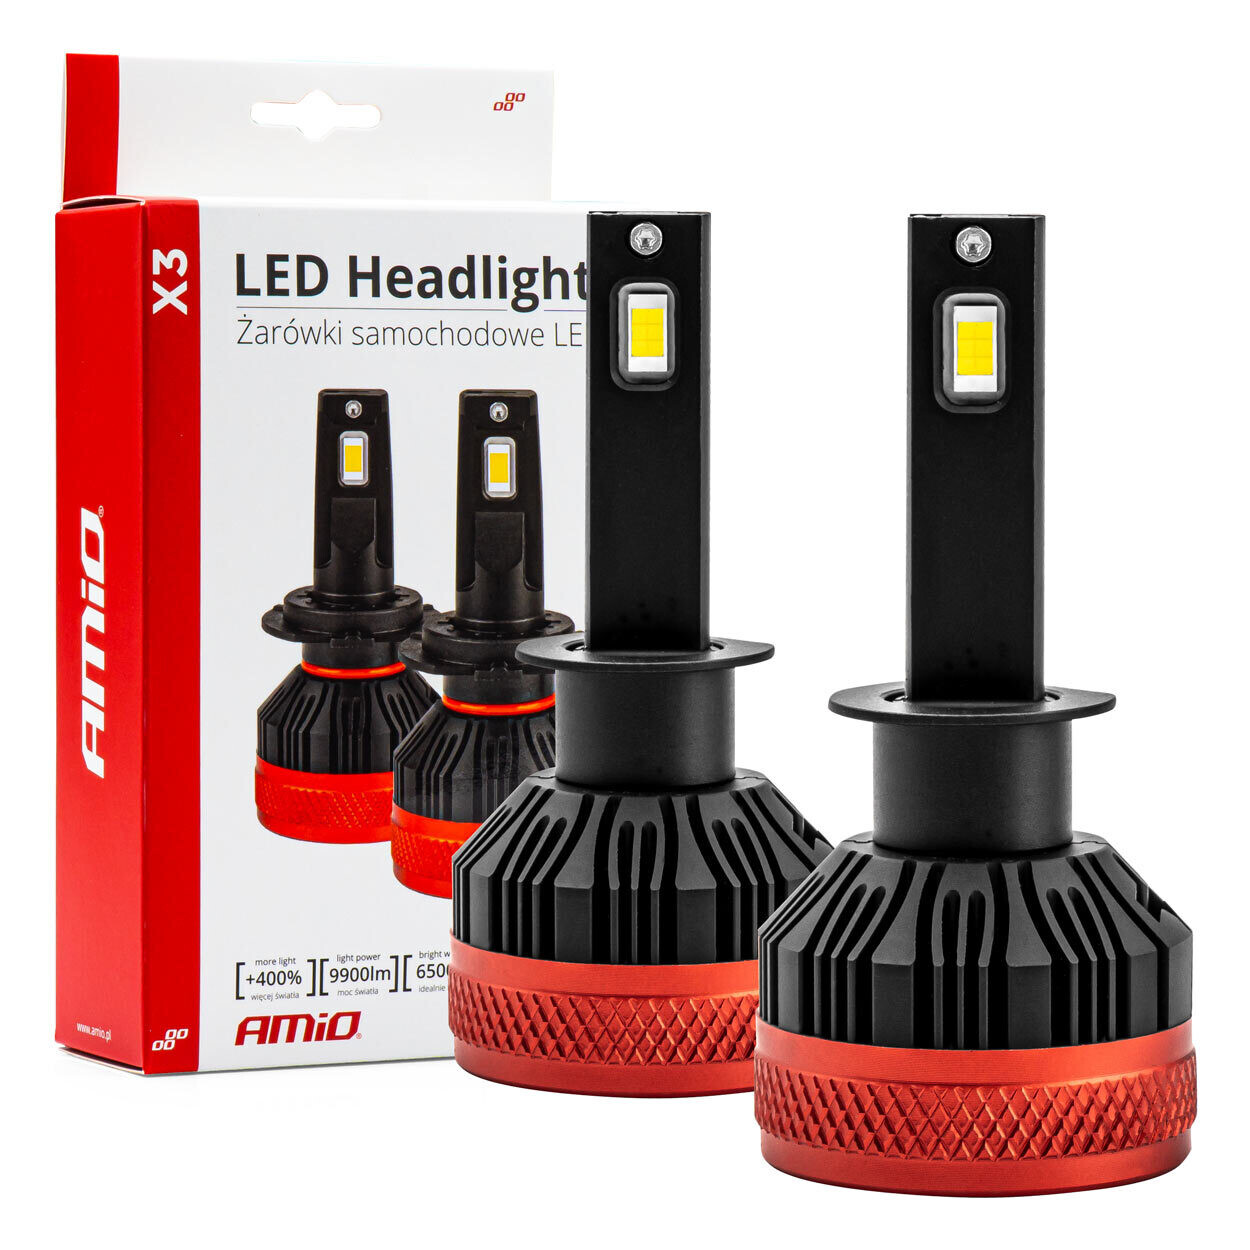 LED Headlight H1 X3 Series AMiO